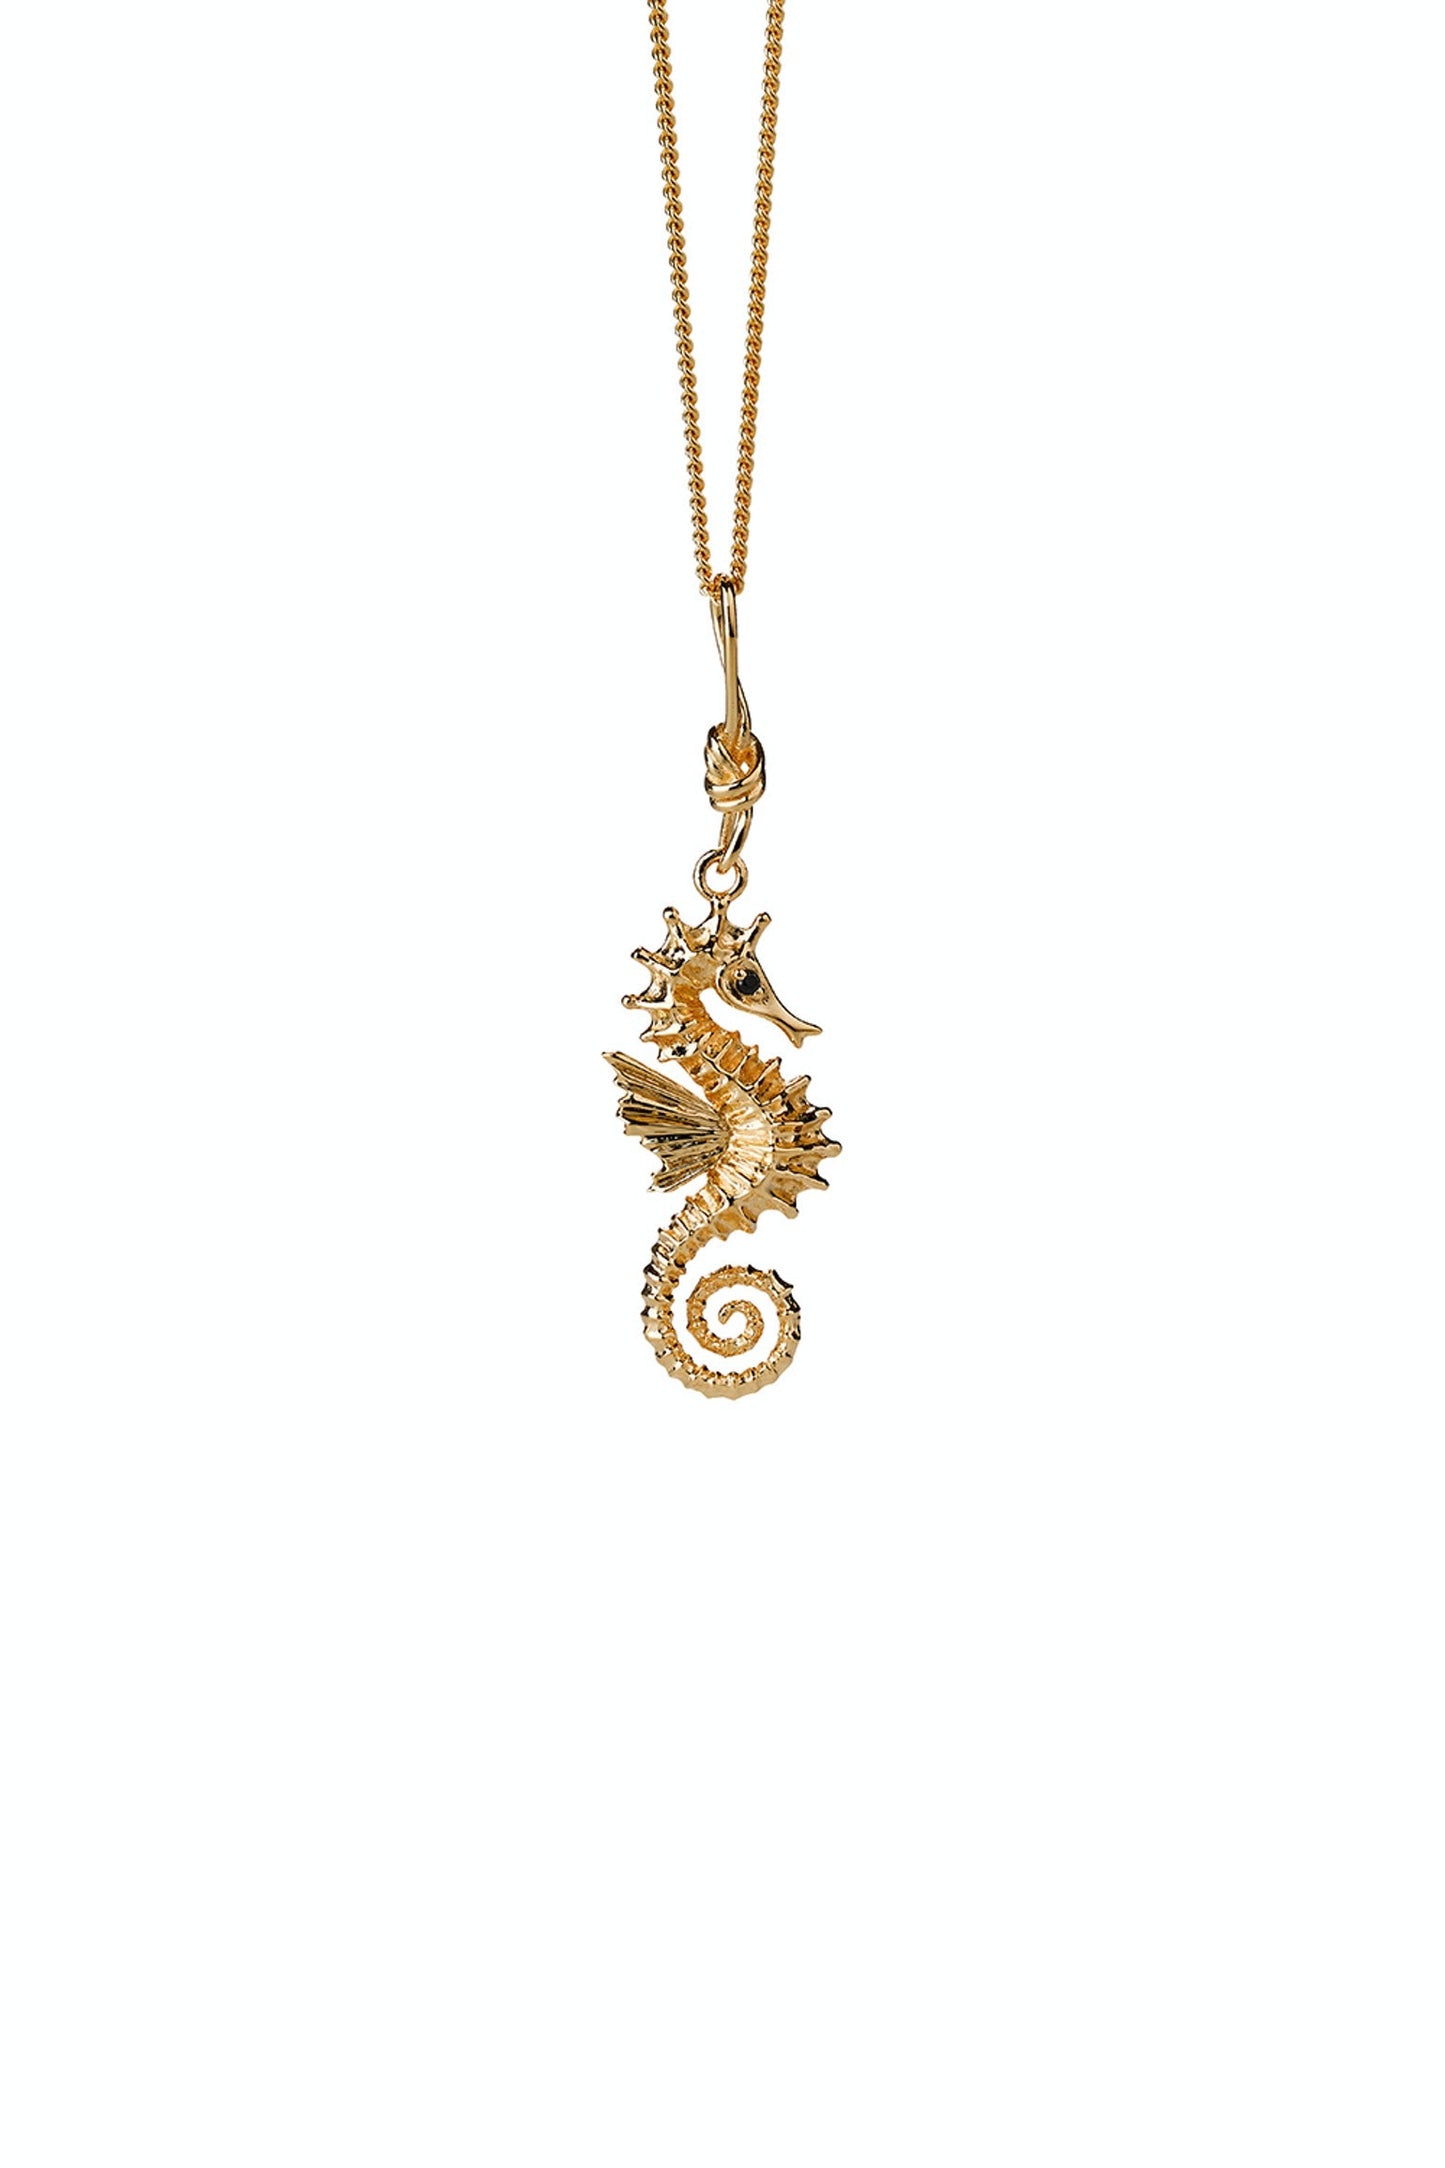 Karen Walker Seahorse Necklace 9 ct gold